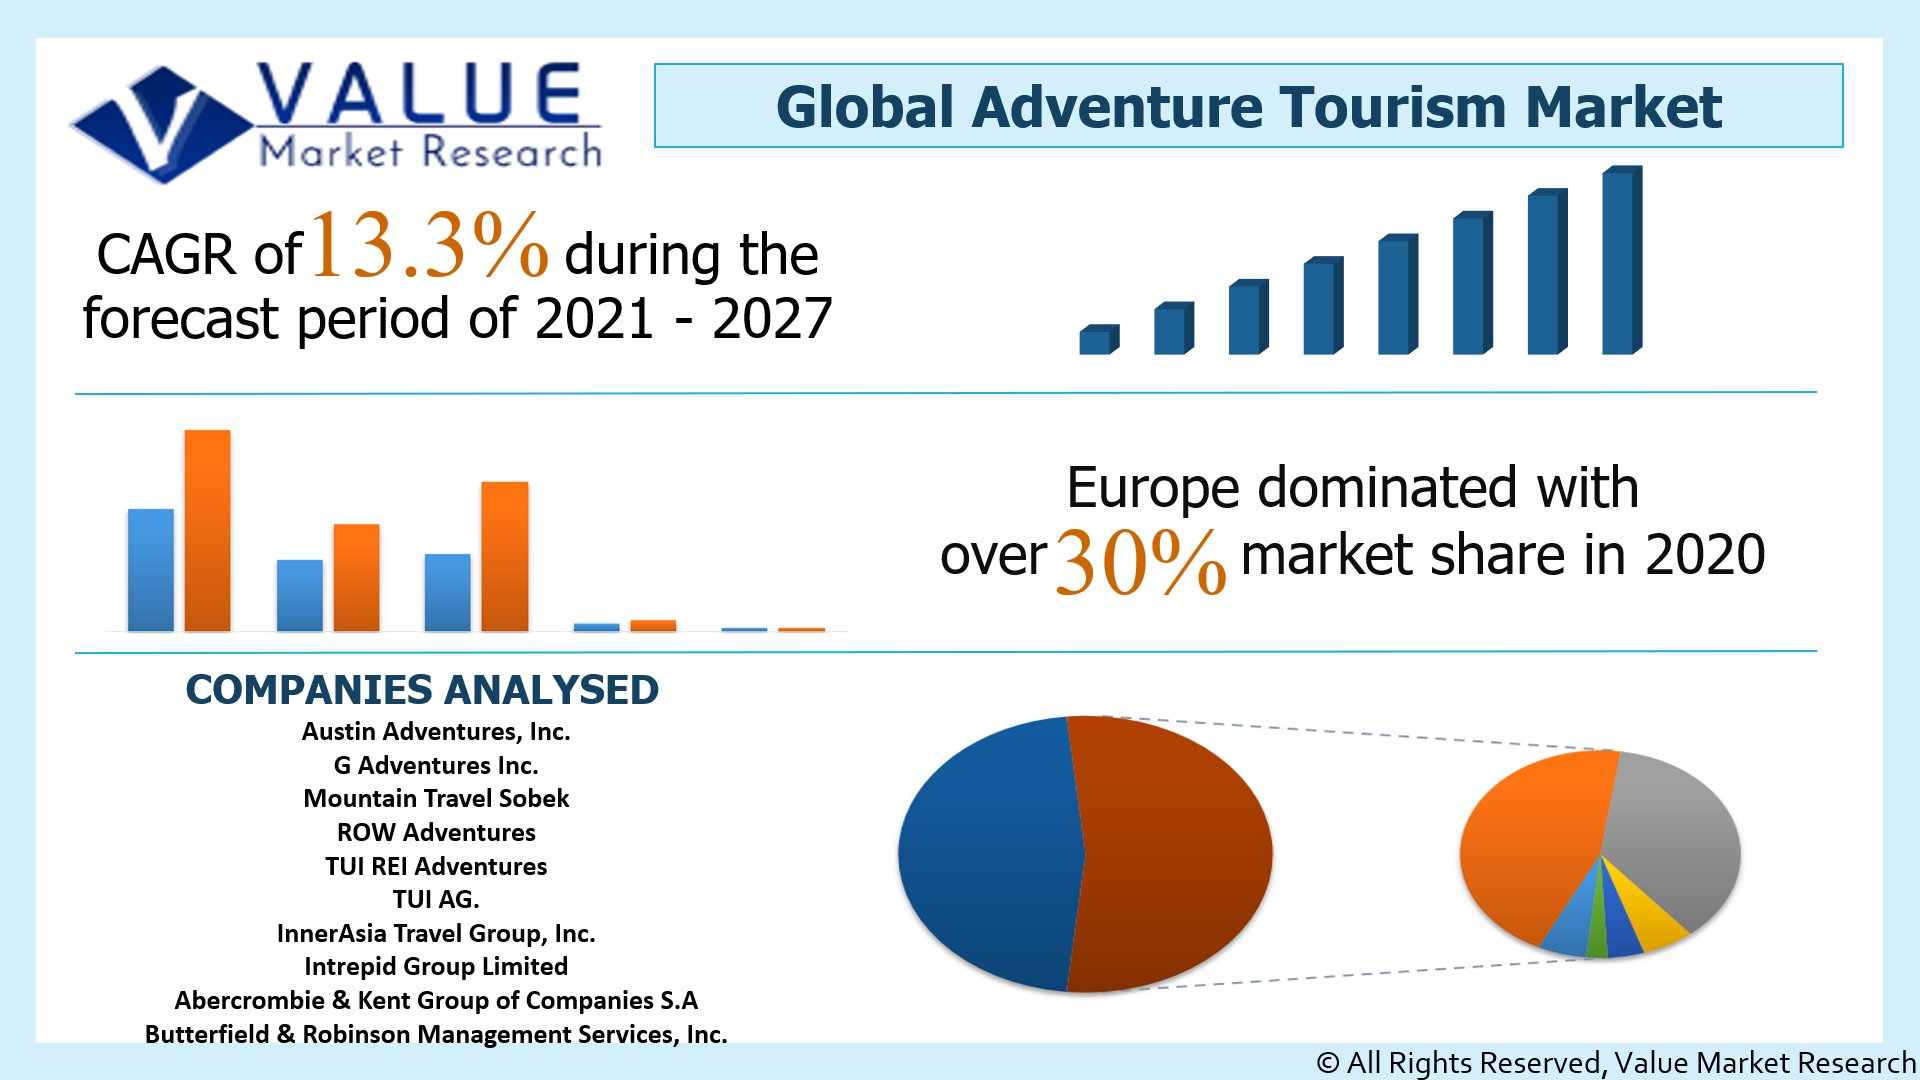 Global Adventure Tourism Market Share